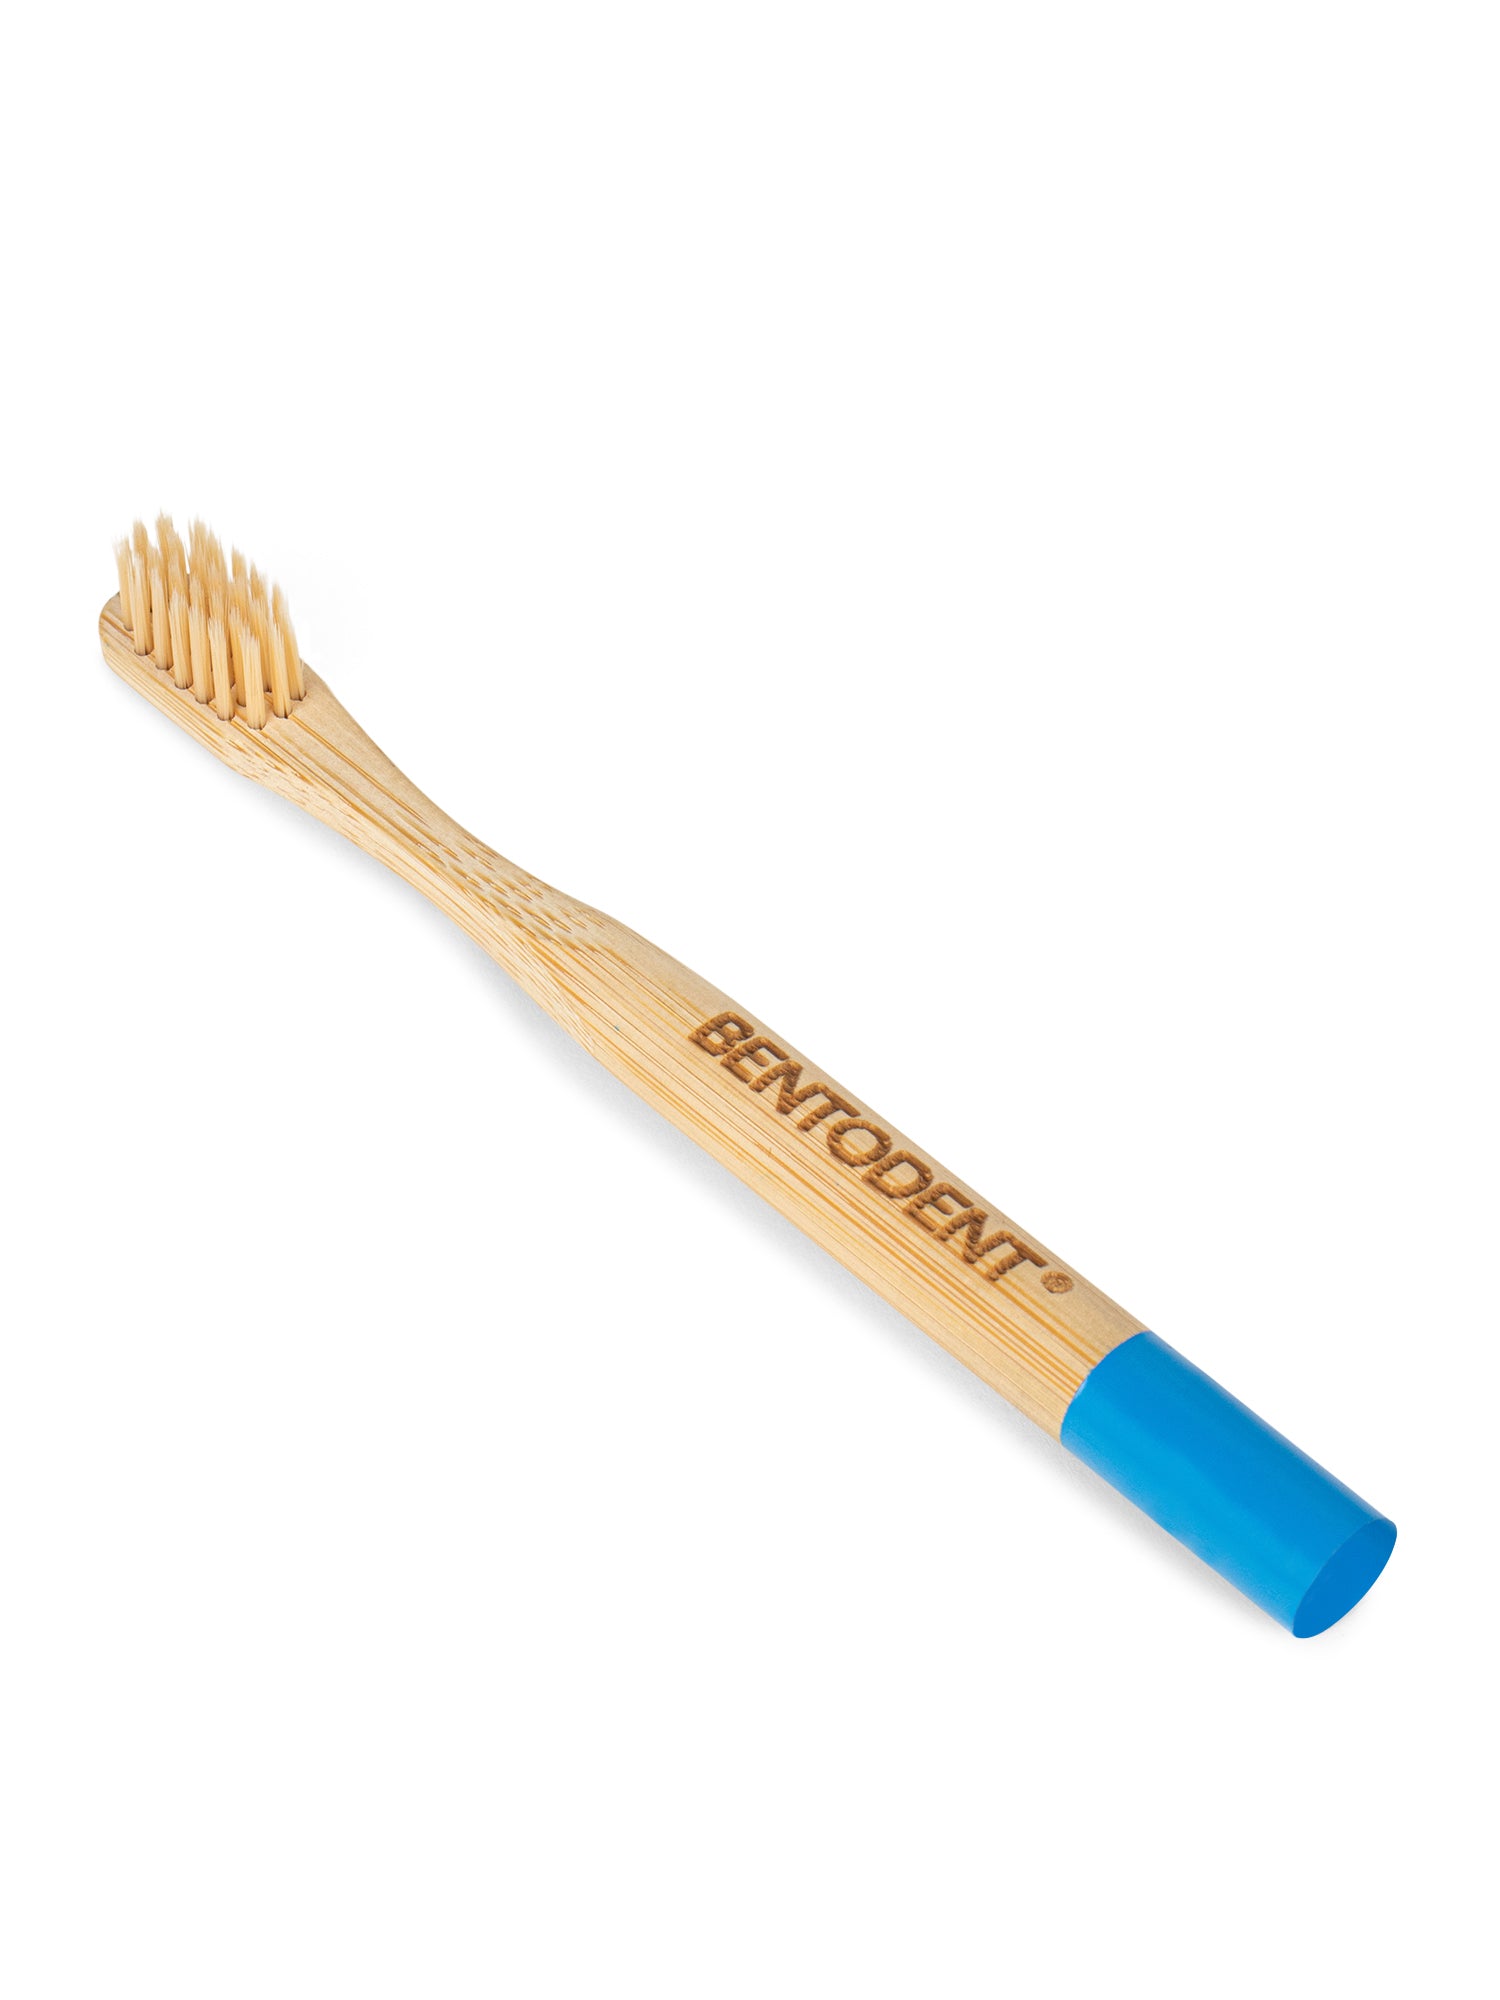 Bentodent Eco Brush Fiber Bamboo Kids Toothbrush (non - charcoal) - Ultra Soft - Indian Dental Organization